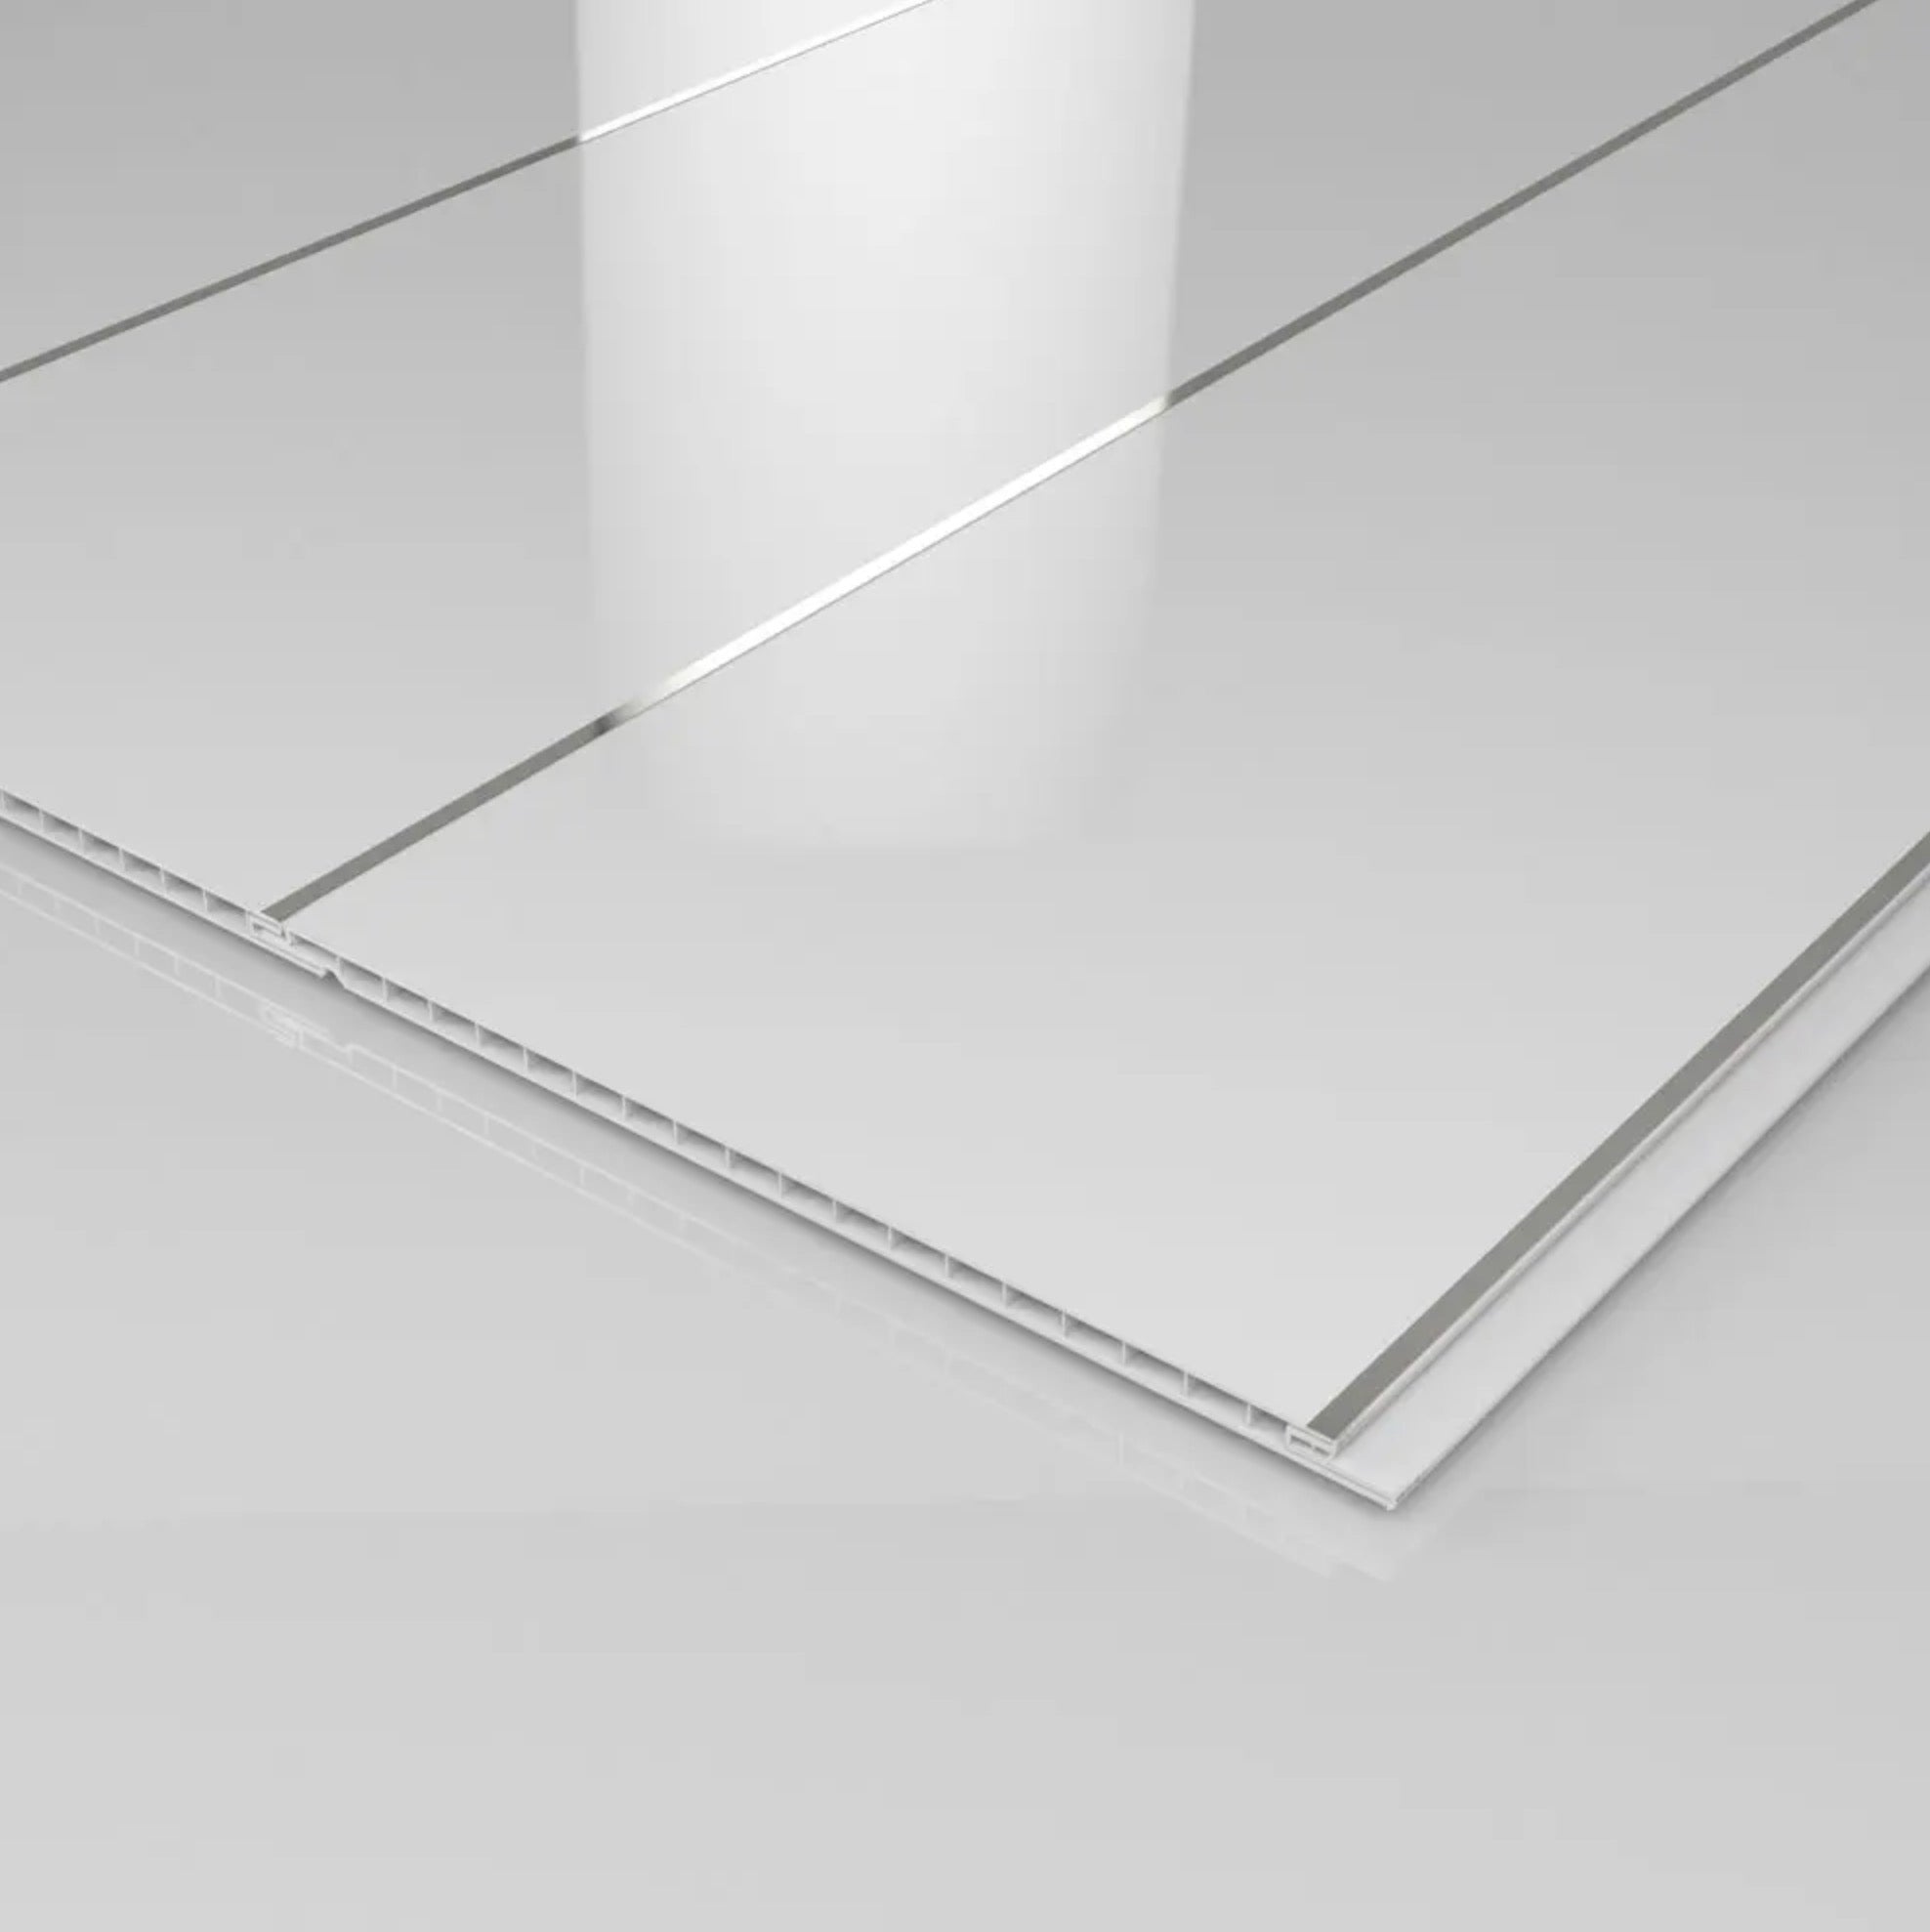 Ceiling Cladding - Single Chrome Gloss